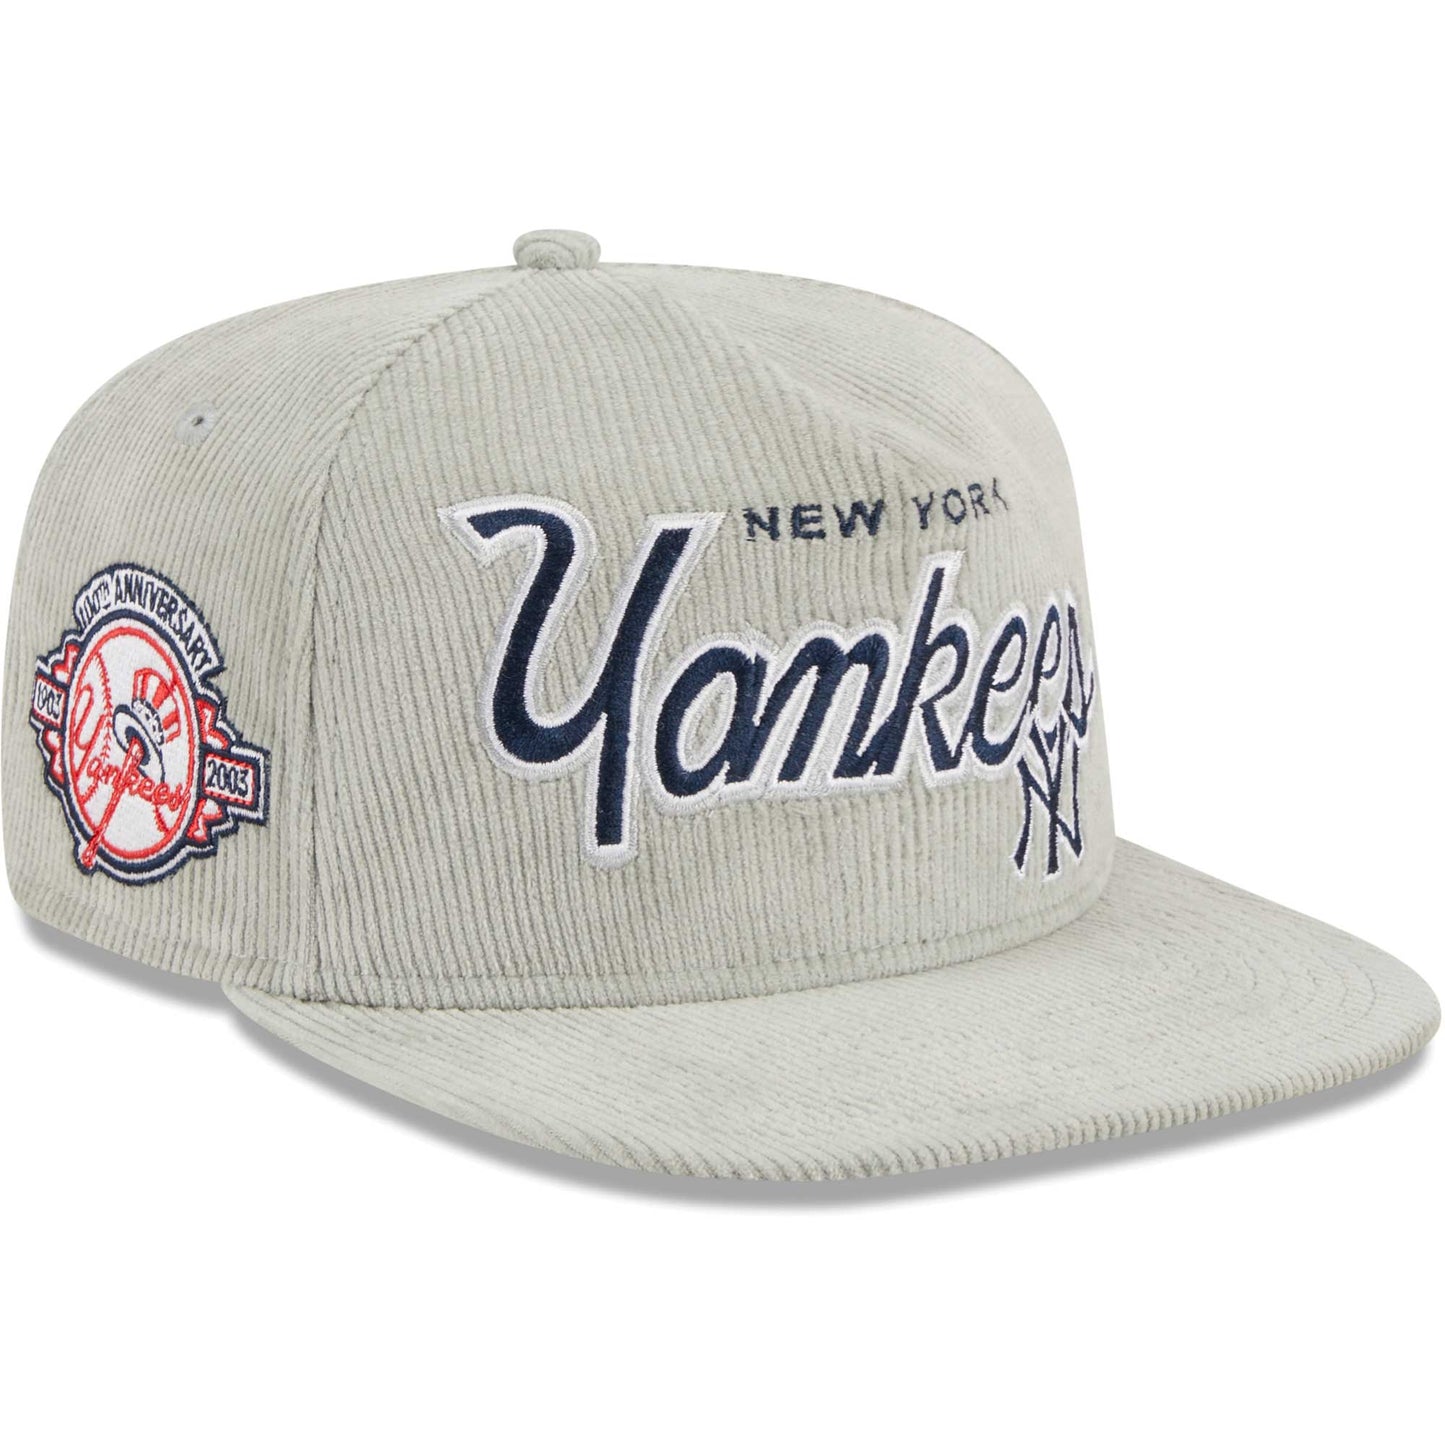 New York Yankees New Era Corduroy Golfer Adjustable Hat - Gray